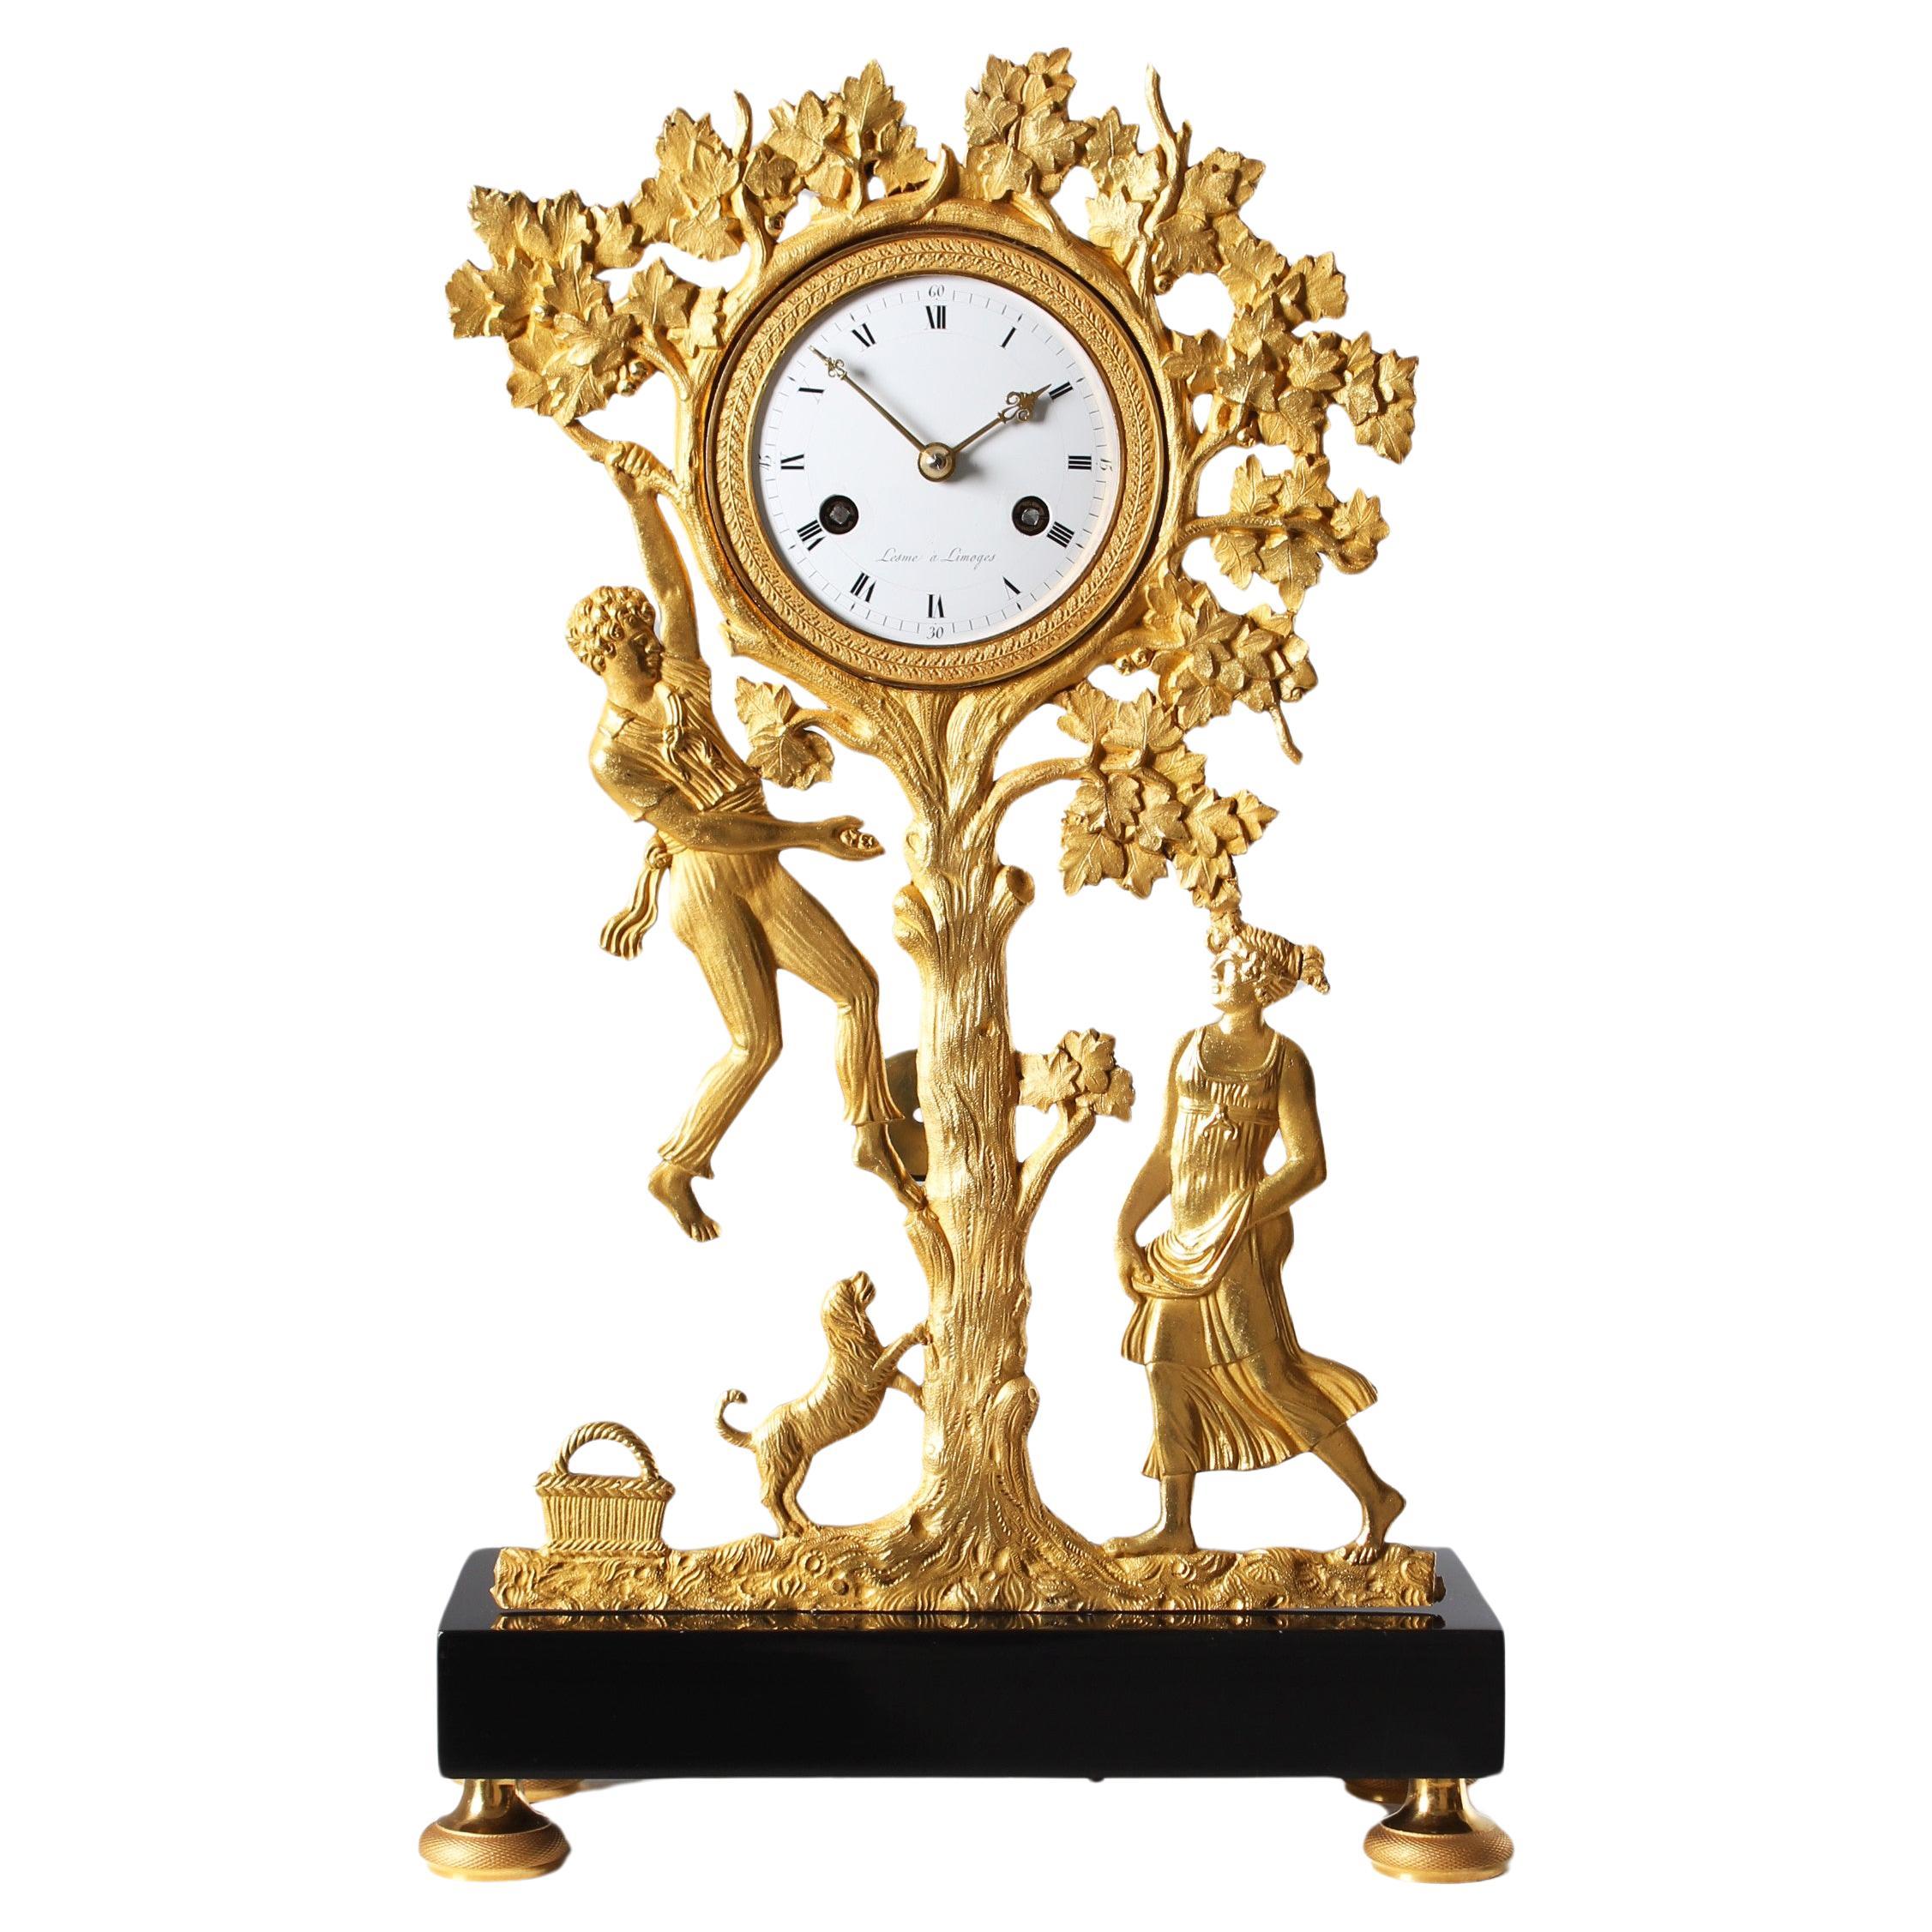 Reloj de chimenea ormolu francés del siglo XIX, hacia 1840